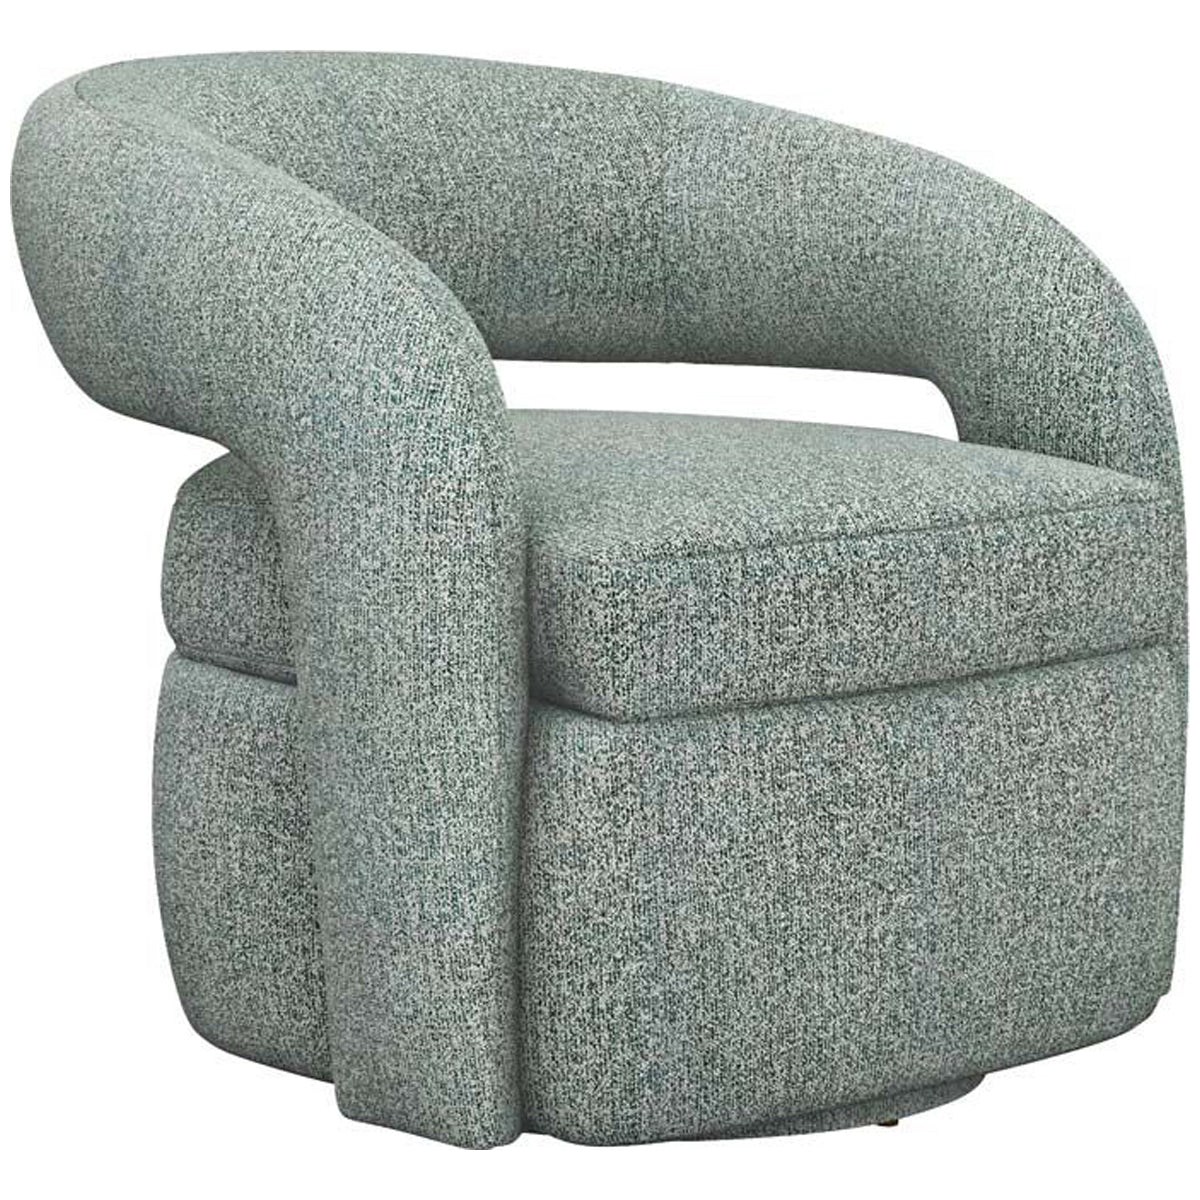 Interlude Home Targa Swivel Chair